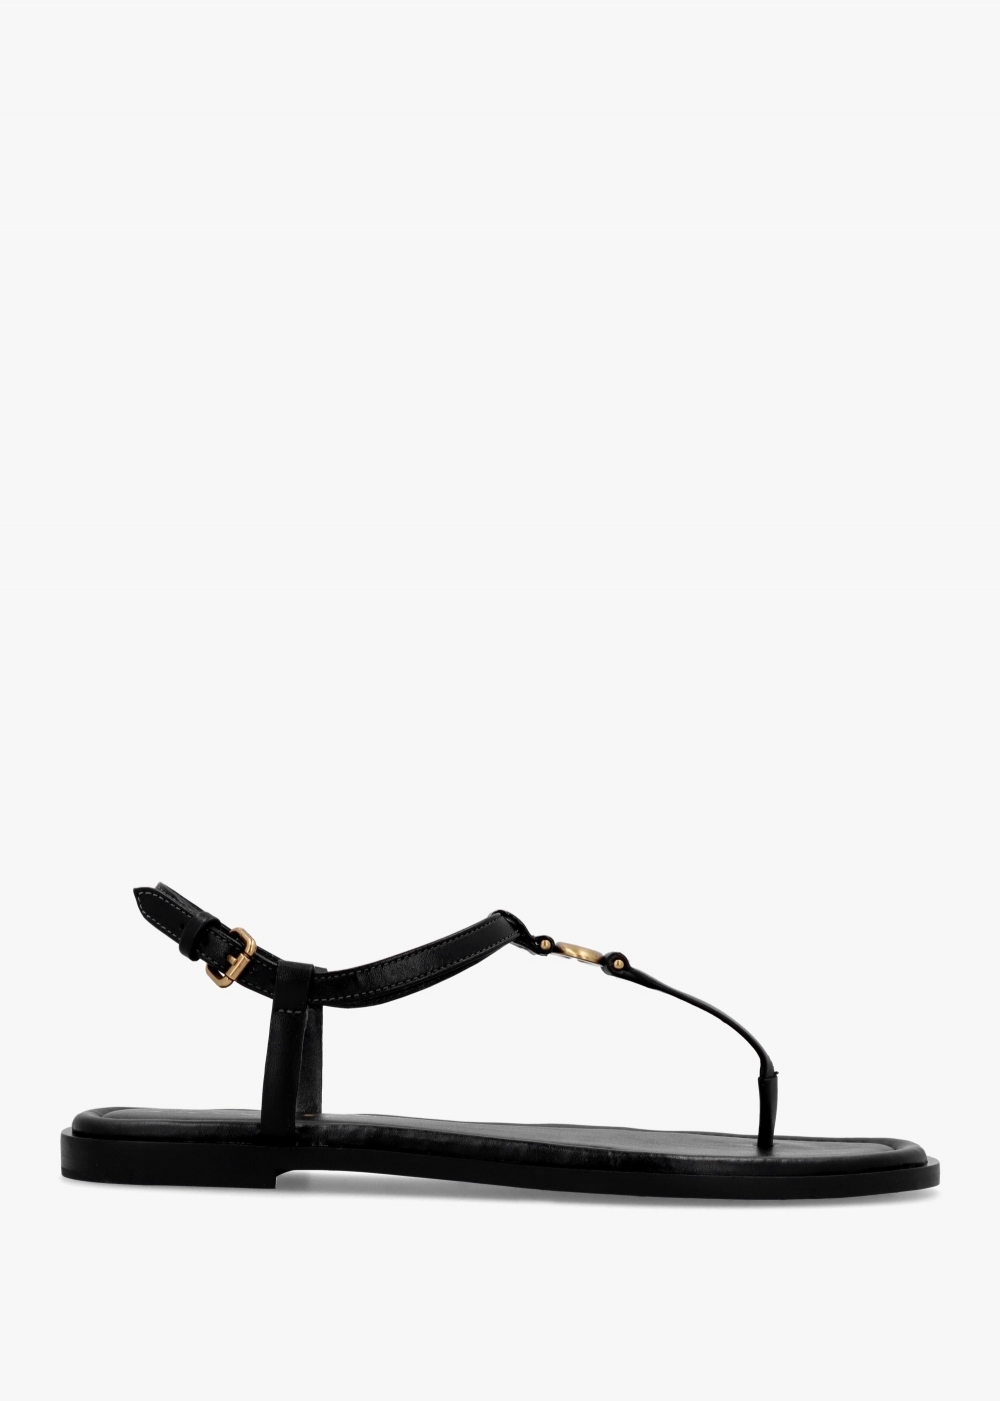 COACH Jessica Black Leather Toe Post Sandals Size: 8